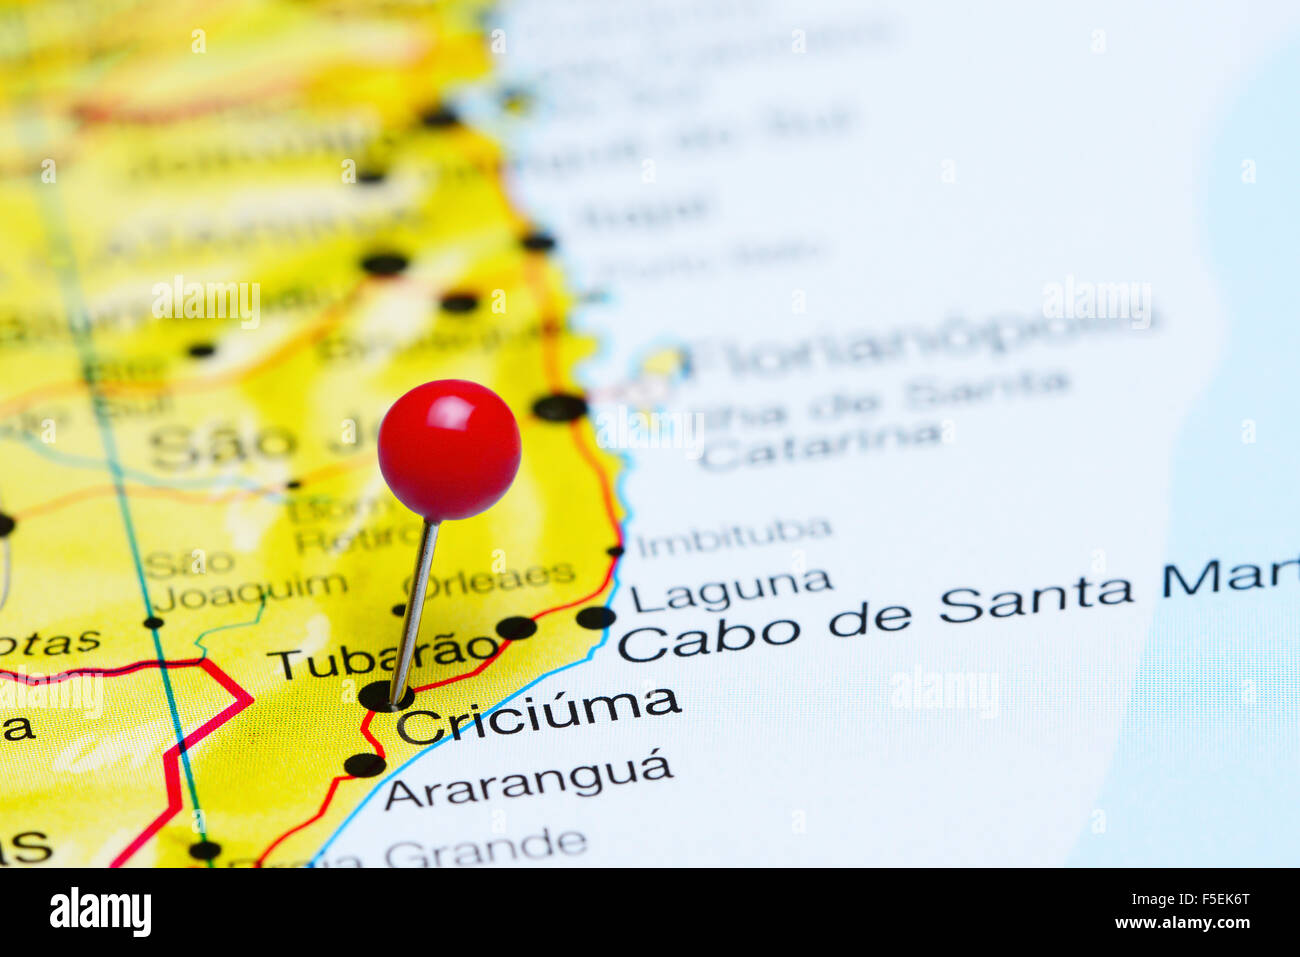 Visit Criciuma: 2023 Travel Guide for Criciuma, Santa Catarina